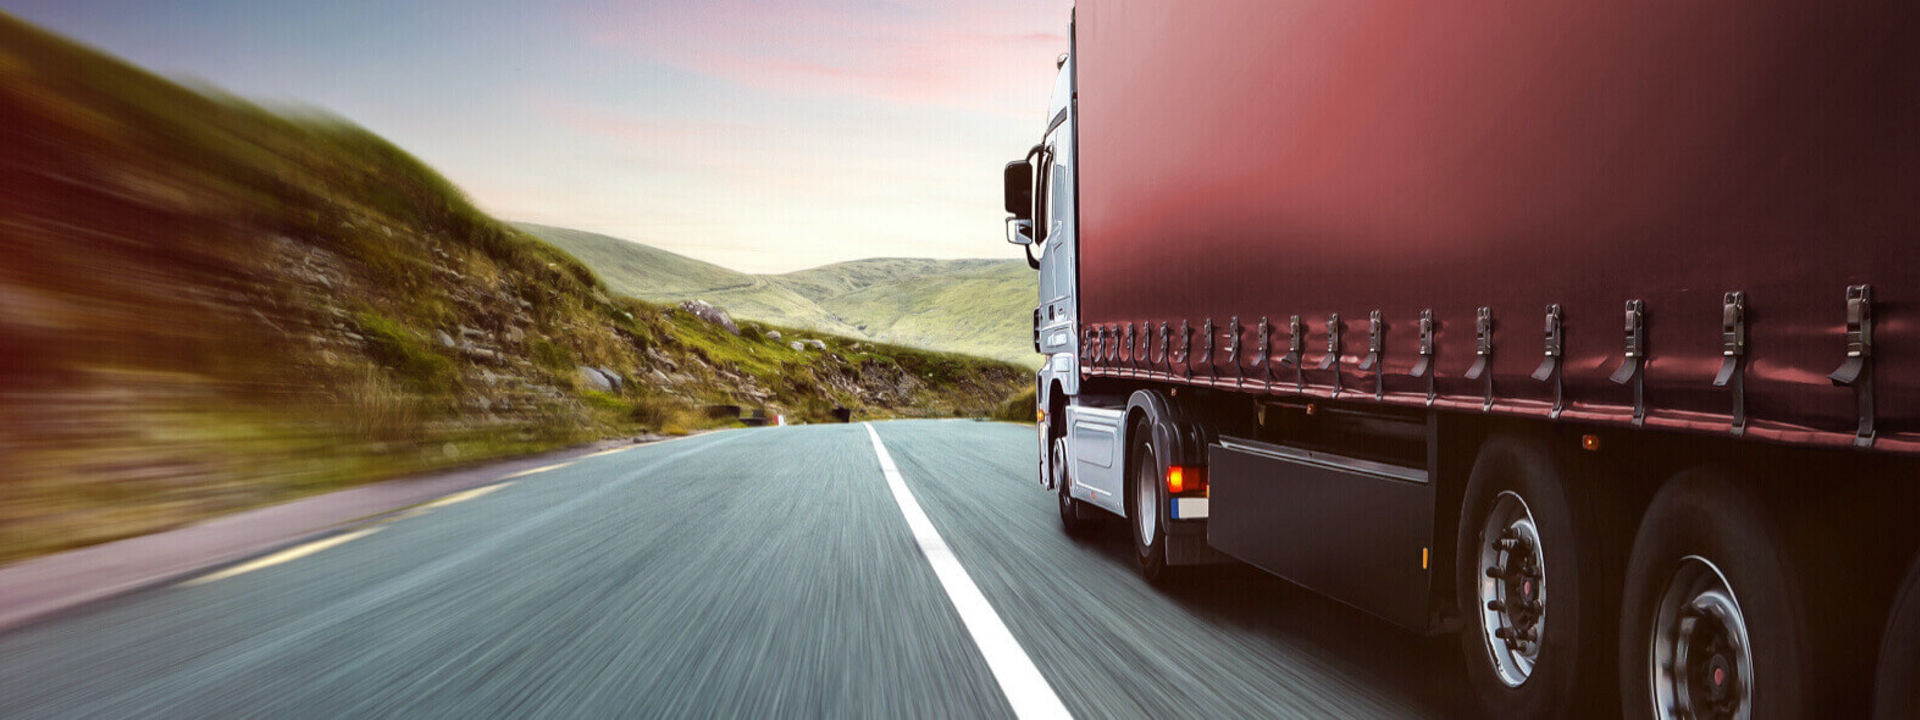 Na ovoj slici prikazan je bočni prikaz cestovne vožnje komercijalnog voznog parka s kamionskim gumama Bridgestone.